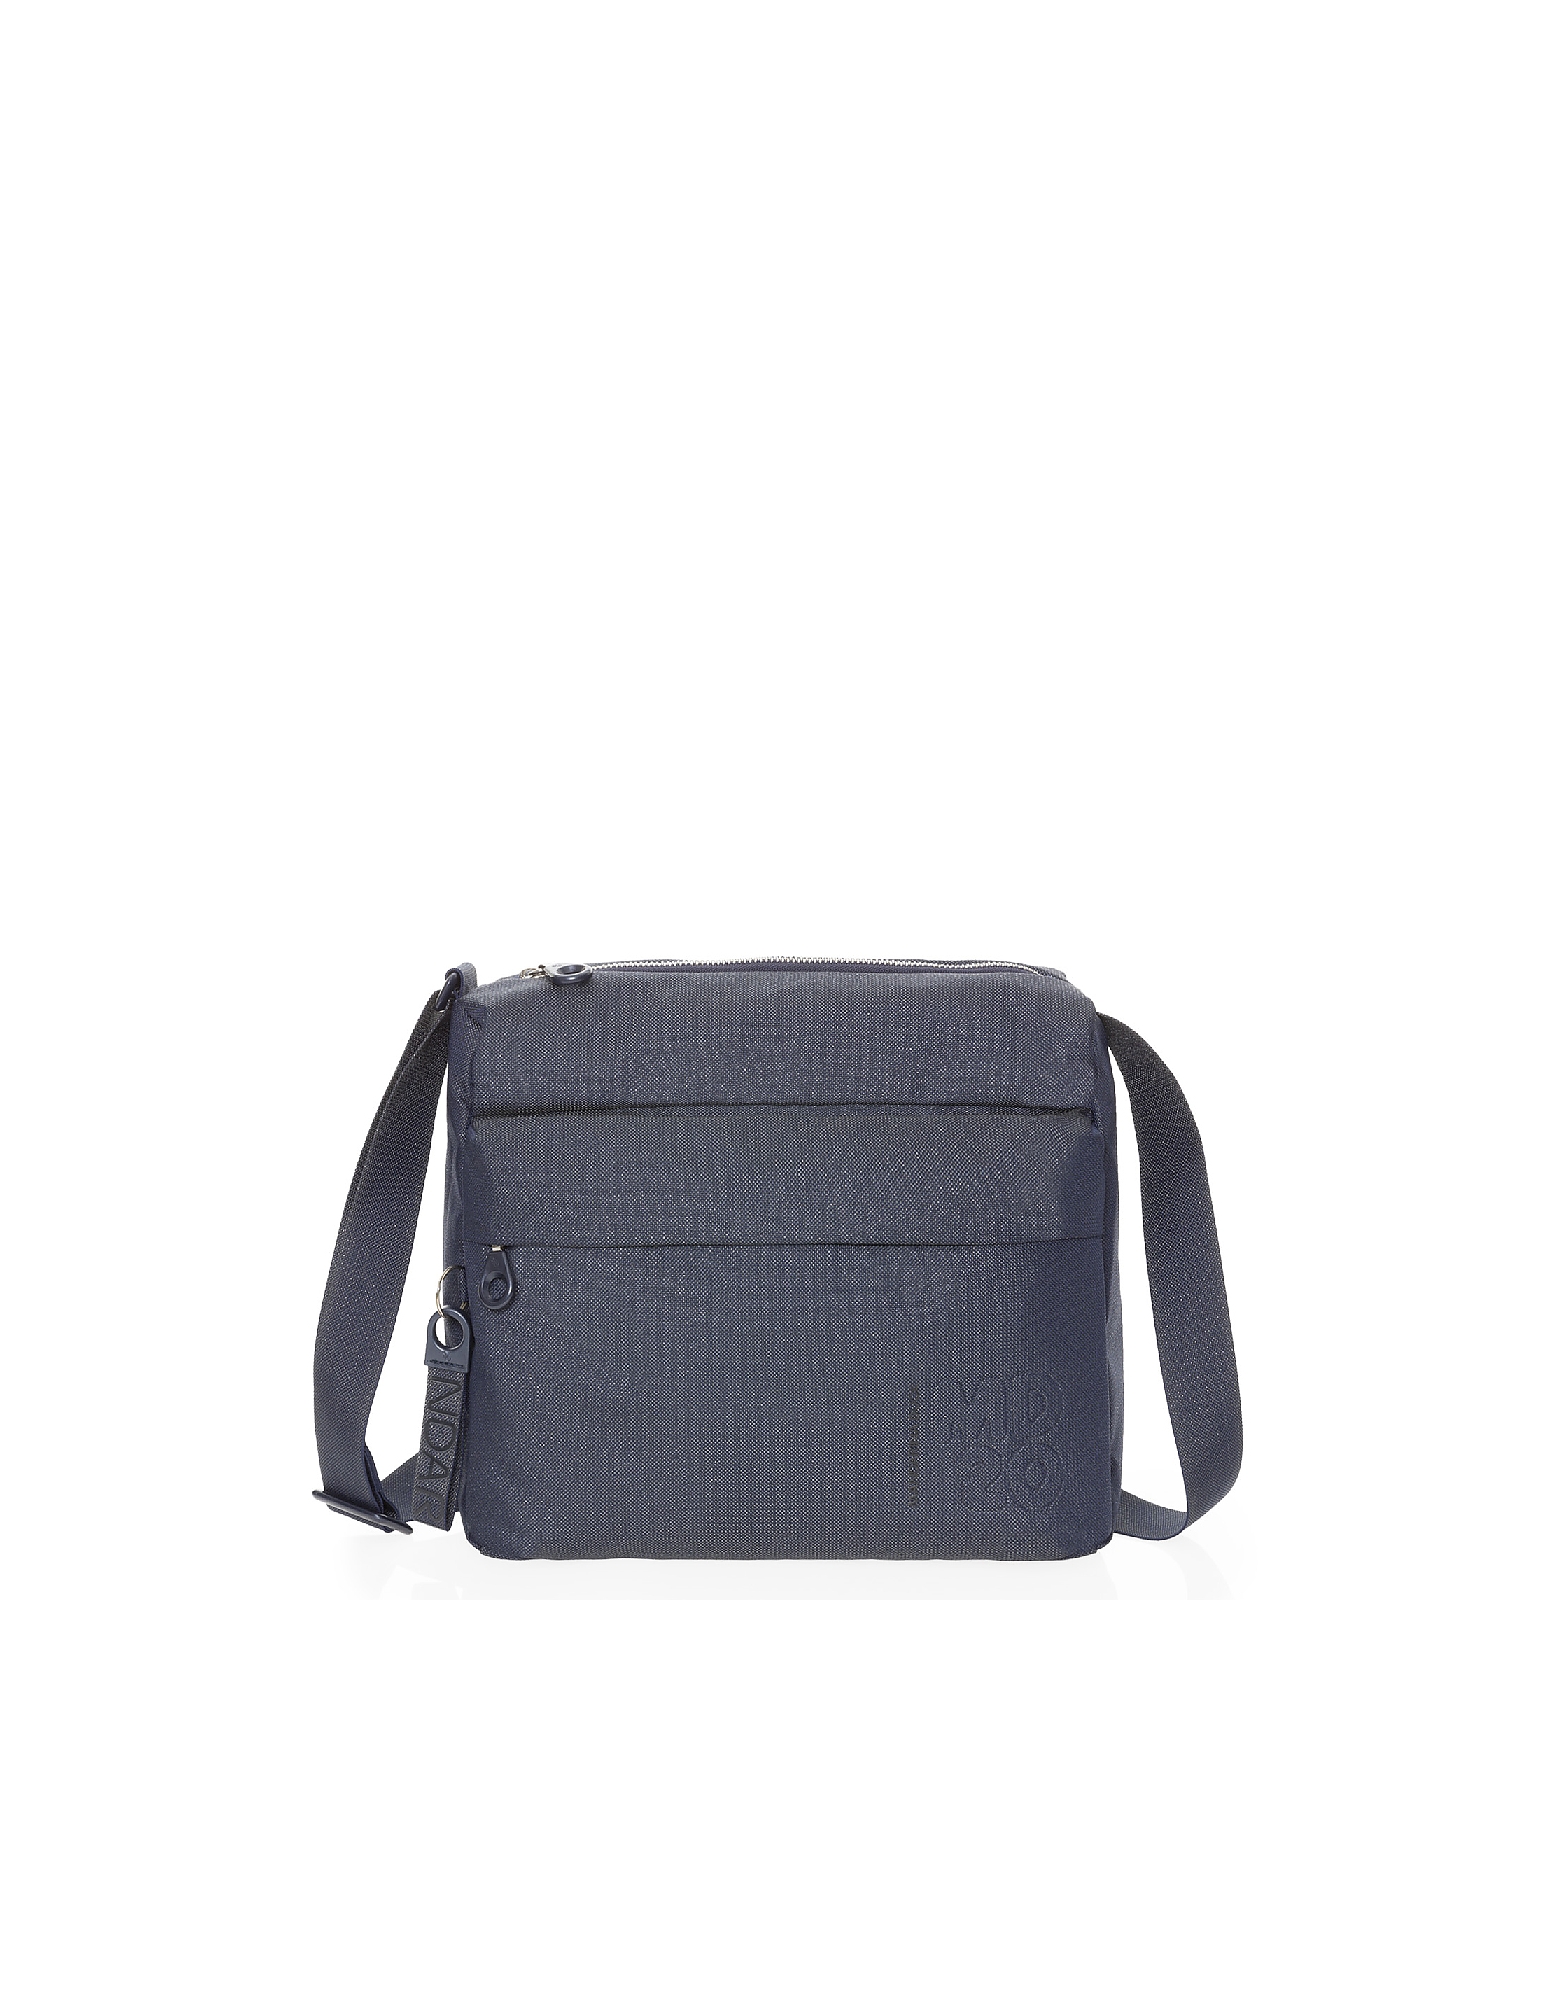 Mandarina Duck Designer Handbags Women's Bag In Blue